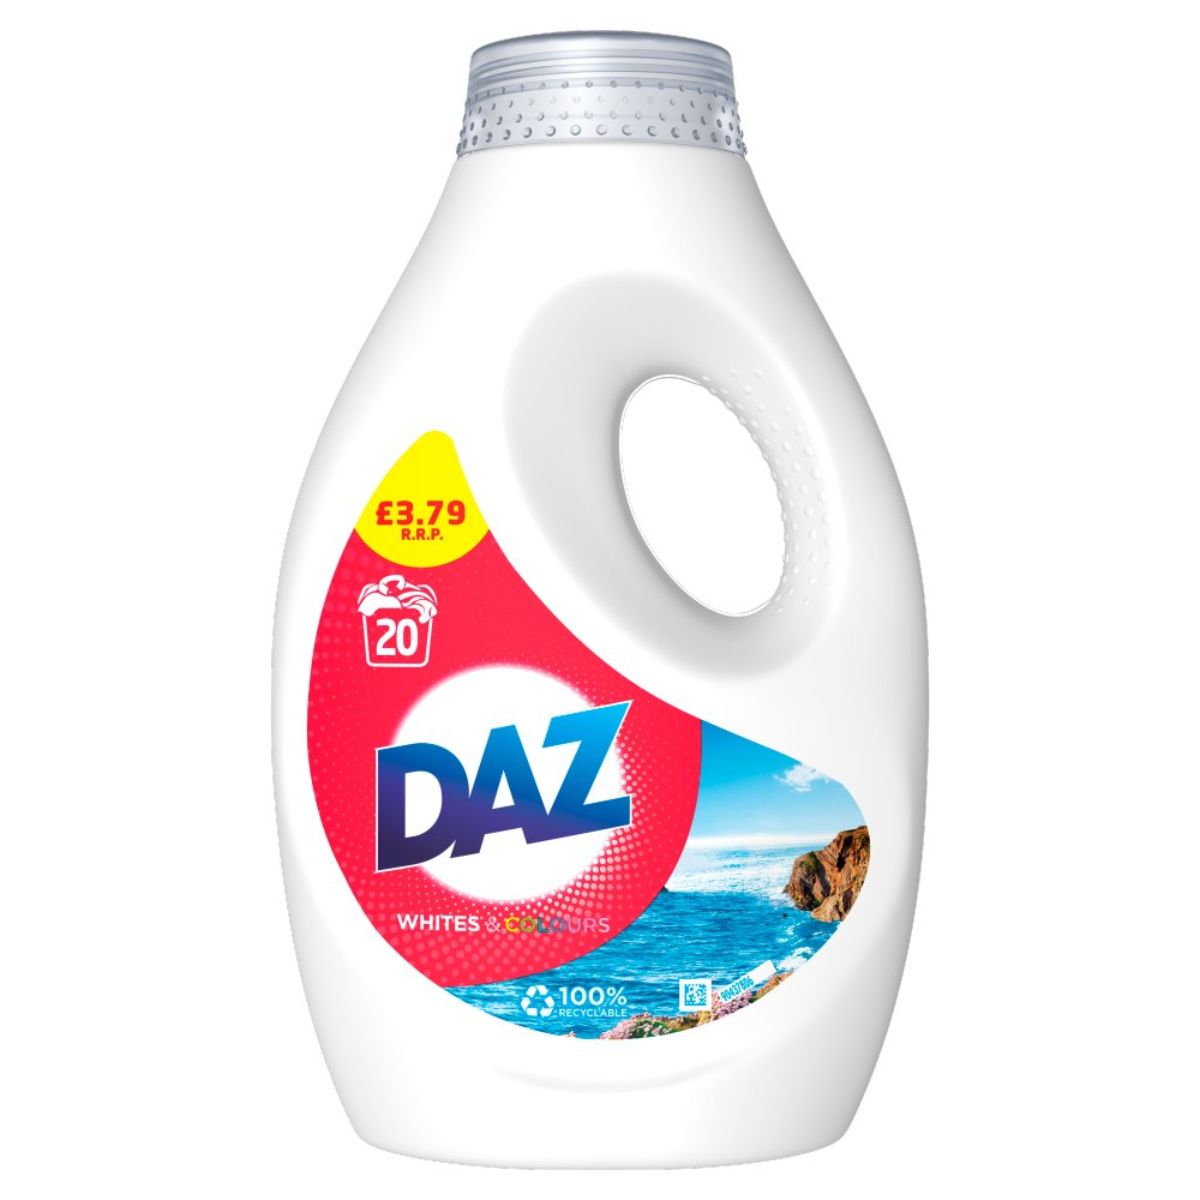 A bottle of DAZ - Washing Liquid 20 Washes - 700g on a white background.